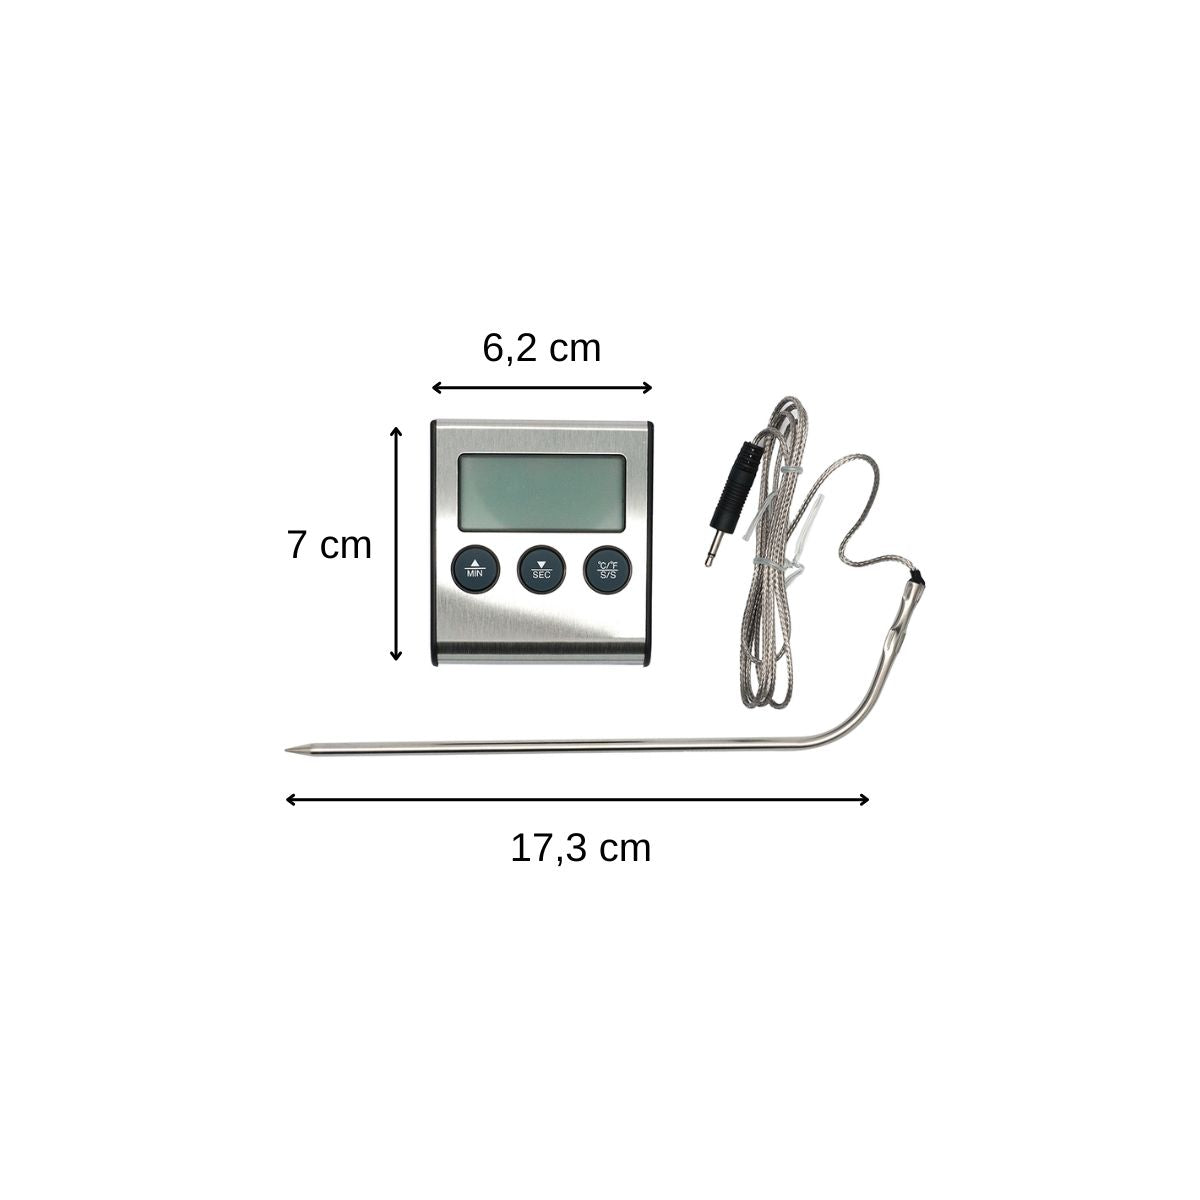 Thermomètre digital à sonde